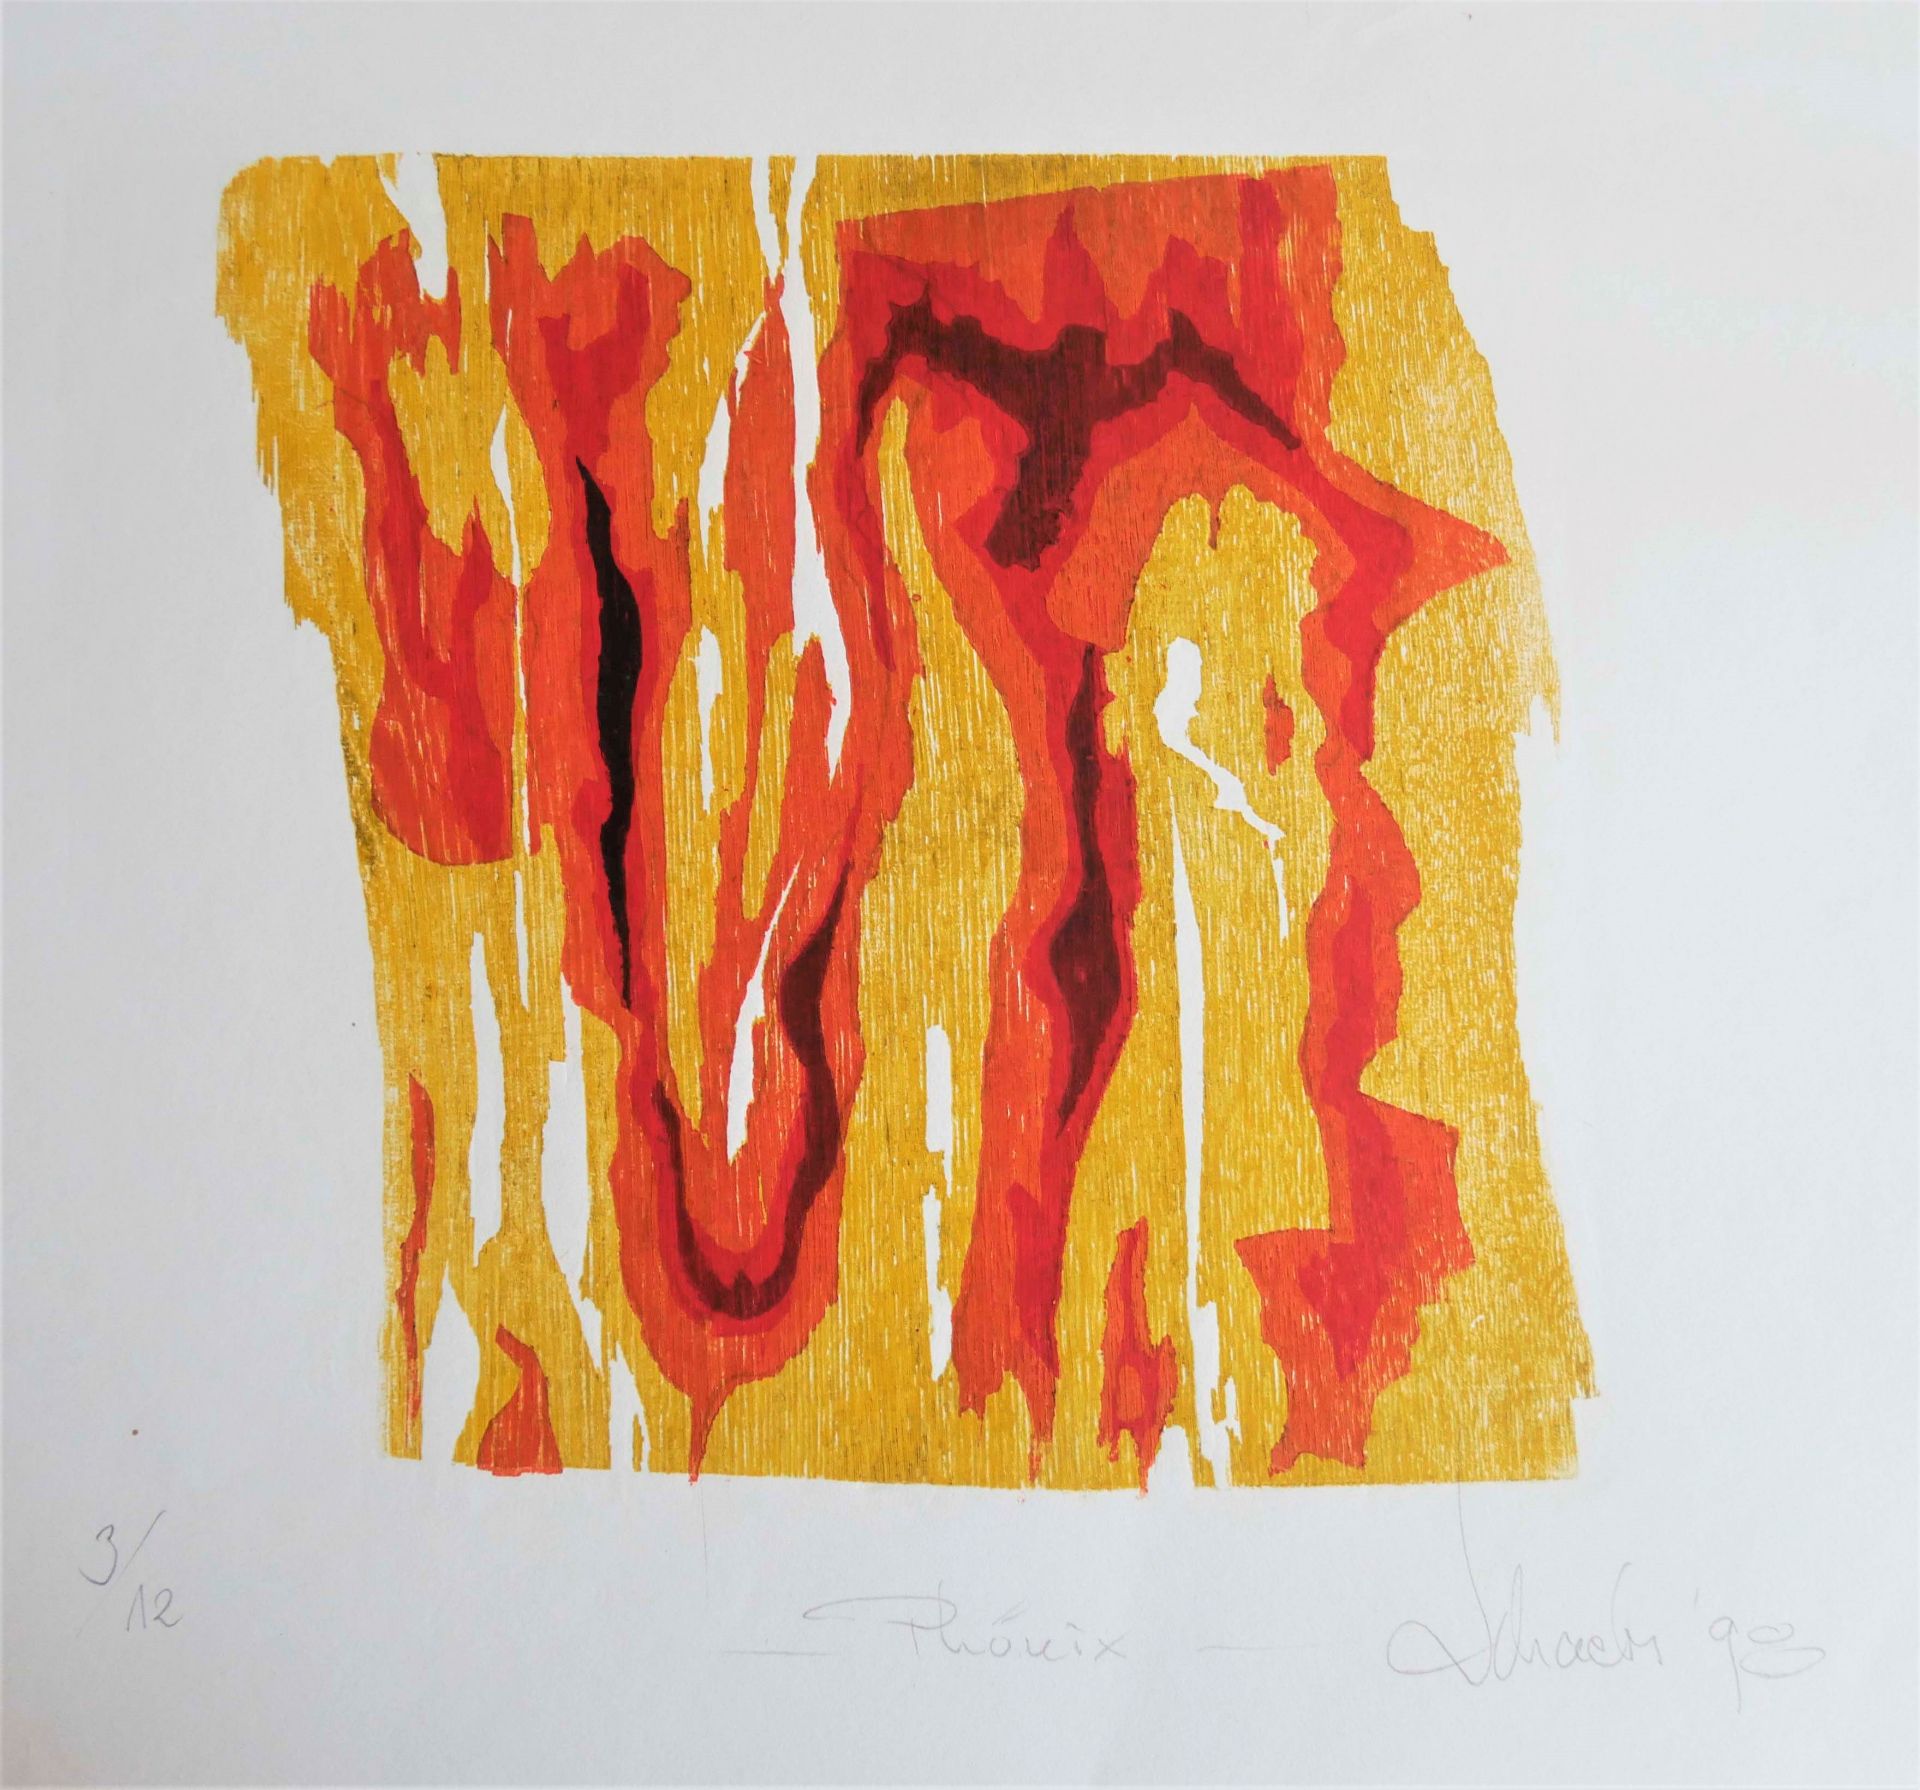 Farblithographie, "Phönix" 3/12, rechts unten Signatur Schach 98. Blattgröße ca. 49 x 68 cm - Image 2 of 2